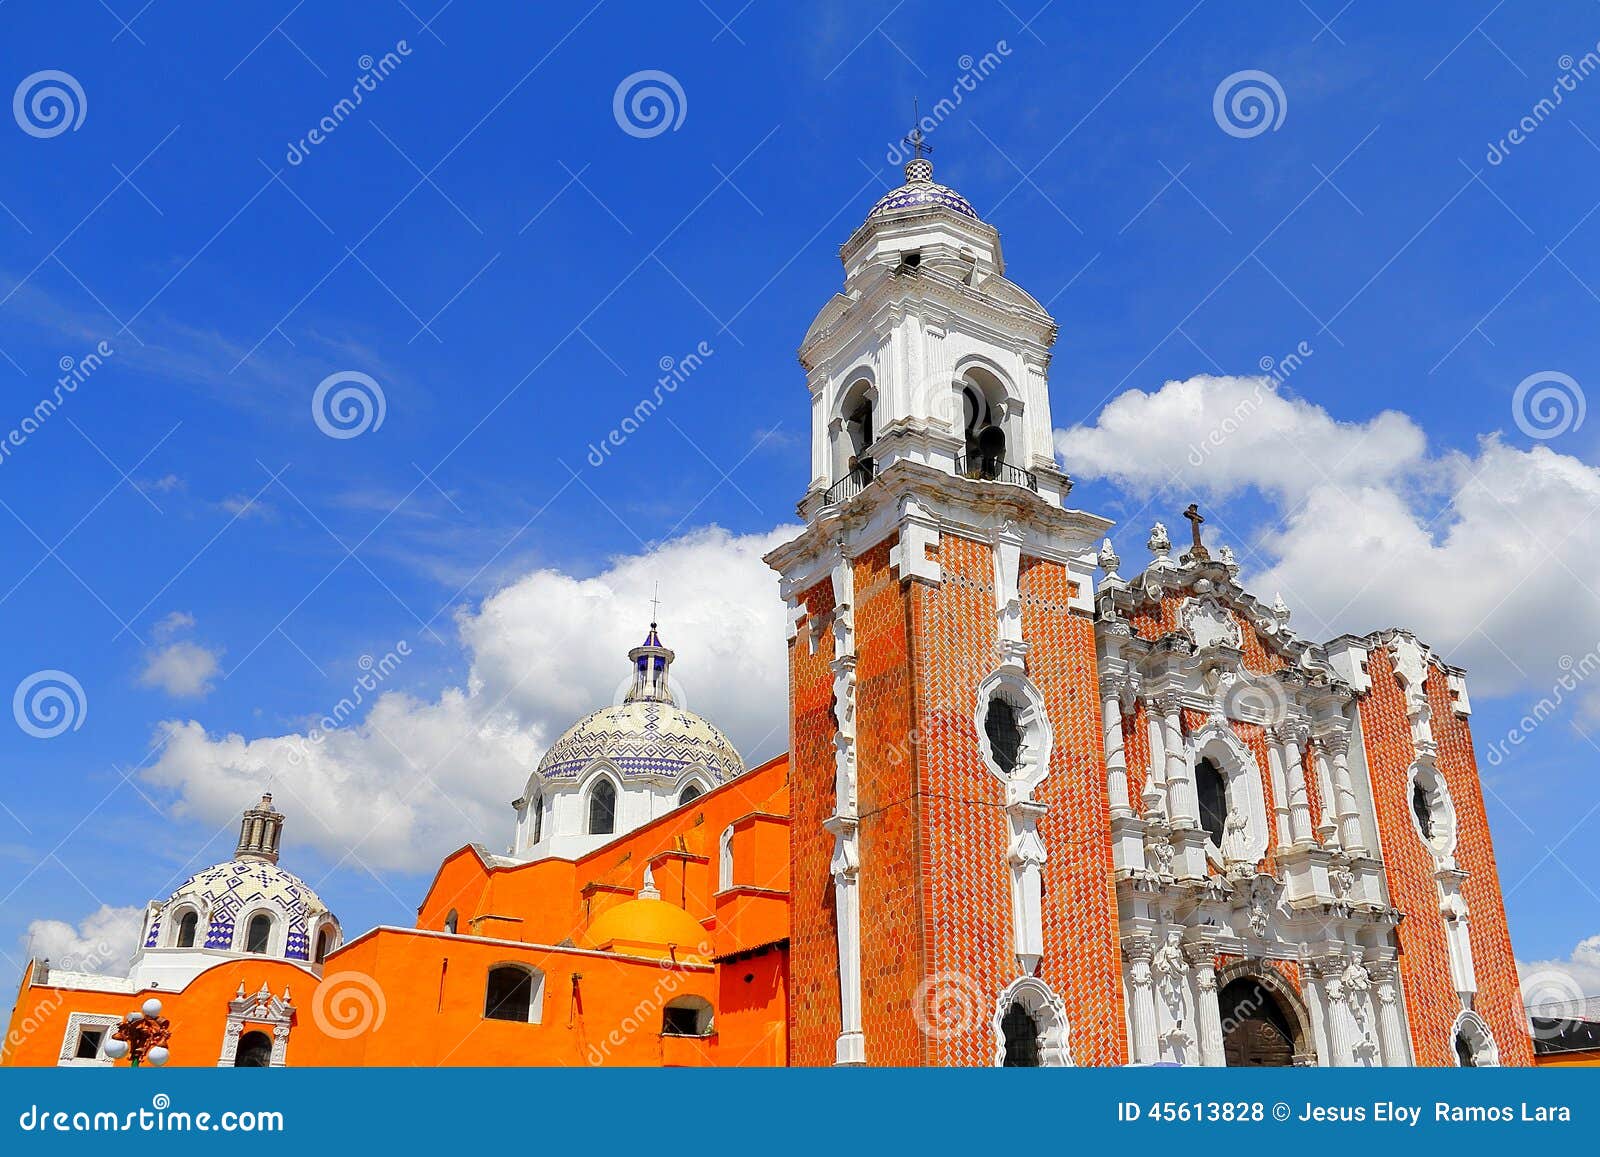 san jose church, city of tlaxcala, mexico. i